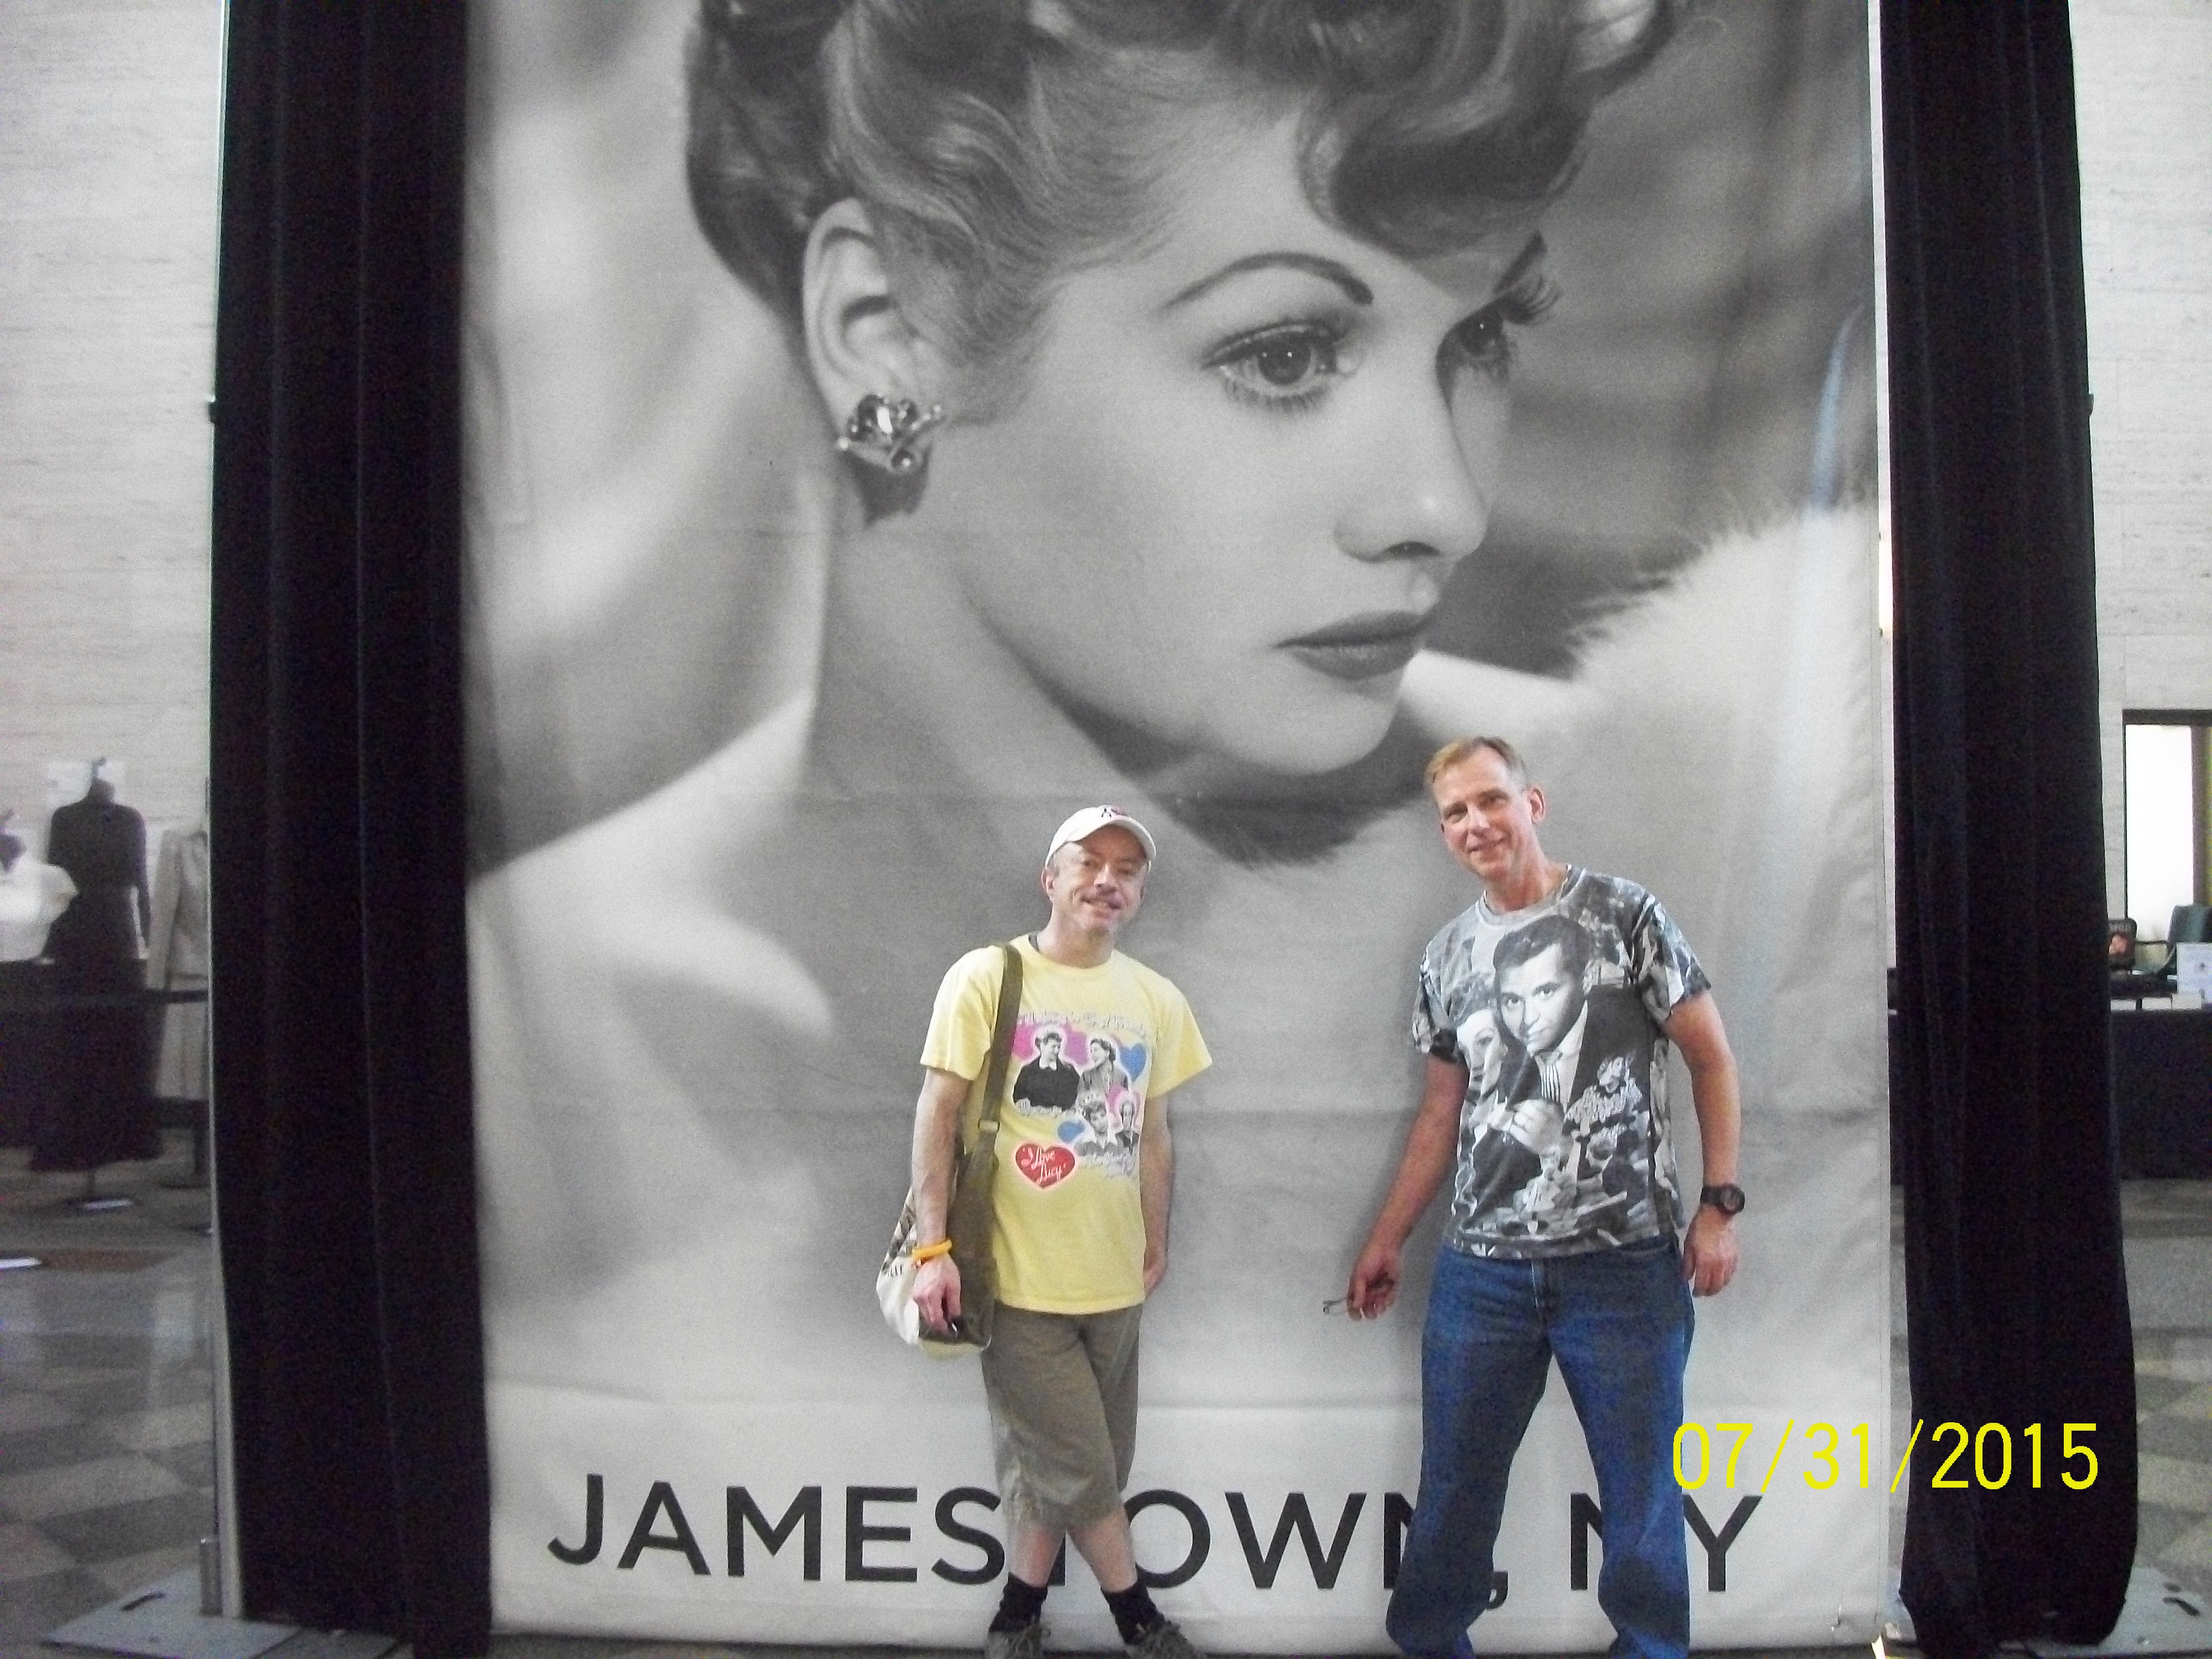 Jaime and His partner John in Jamestown NY